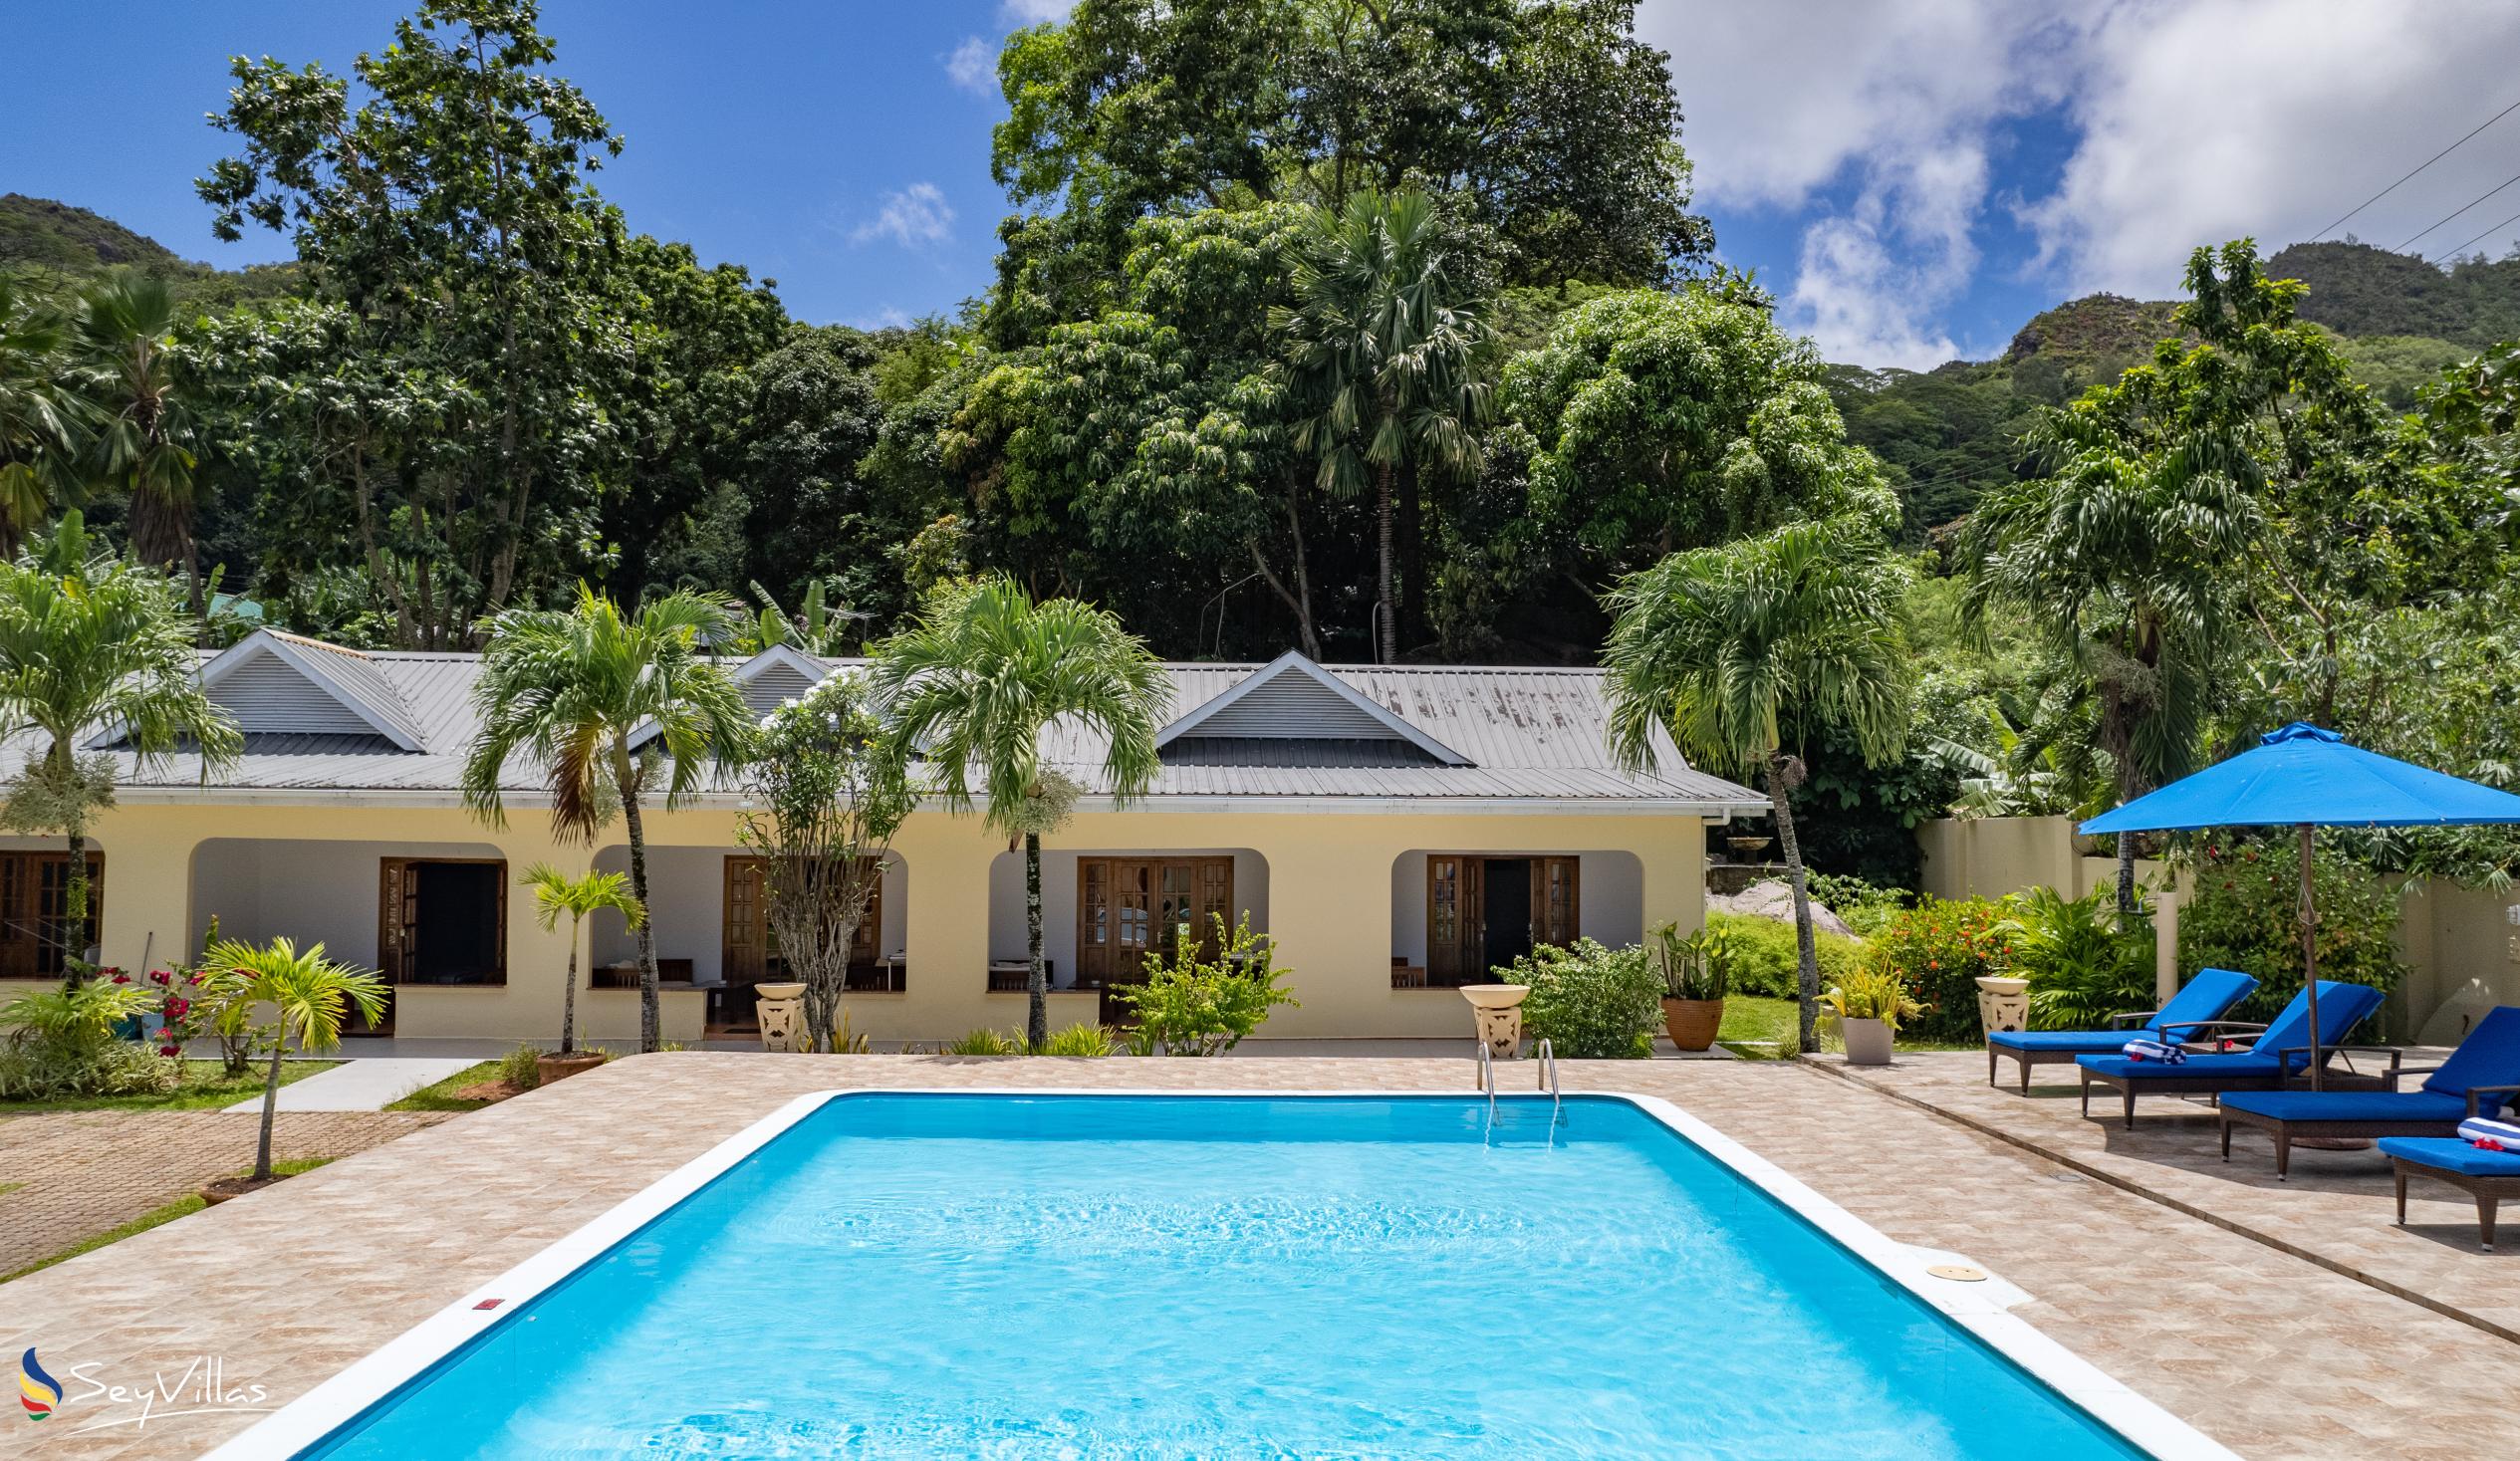 Photo 3: Britannia Hotel - Outdoor area - Praslin (Seychelles)